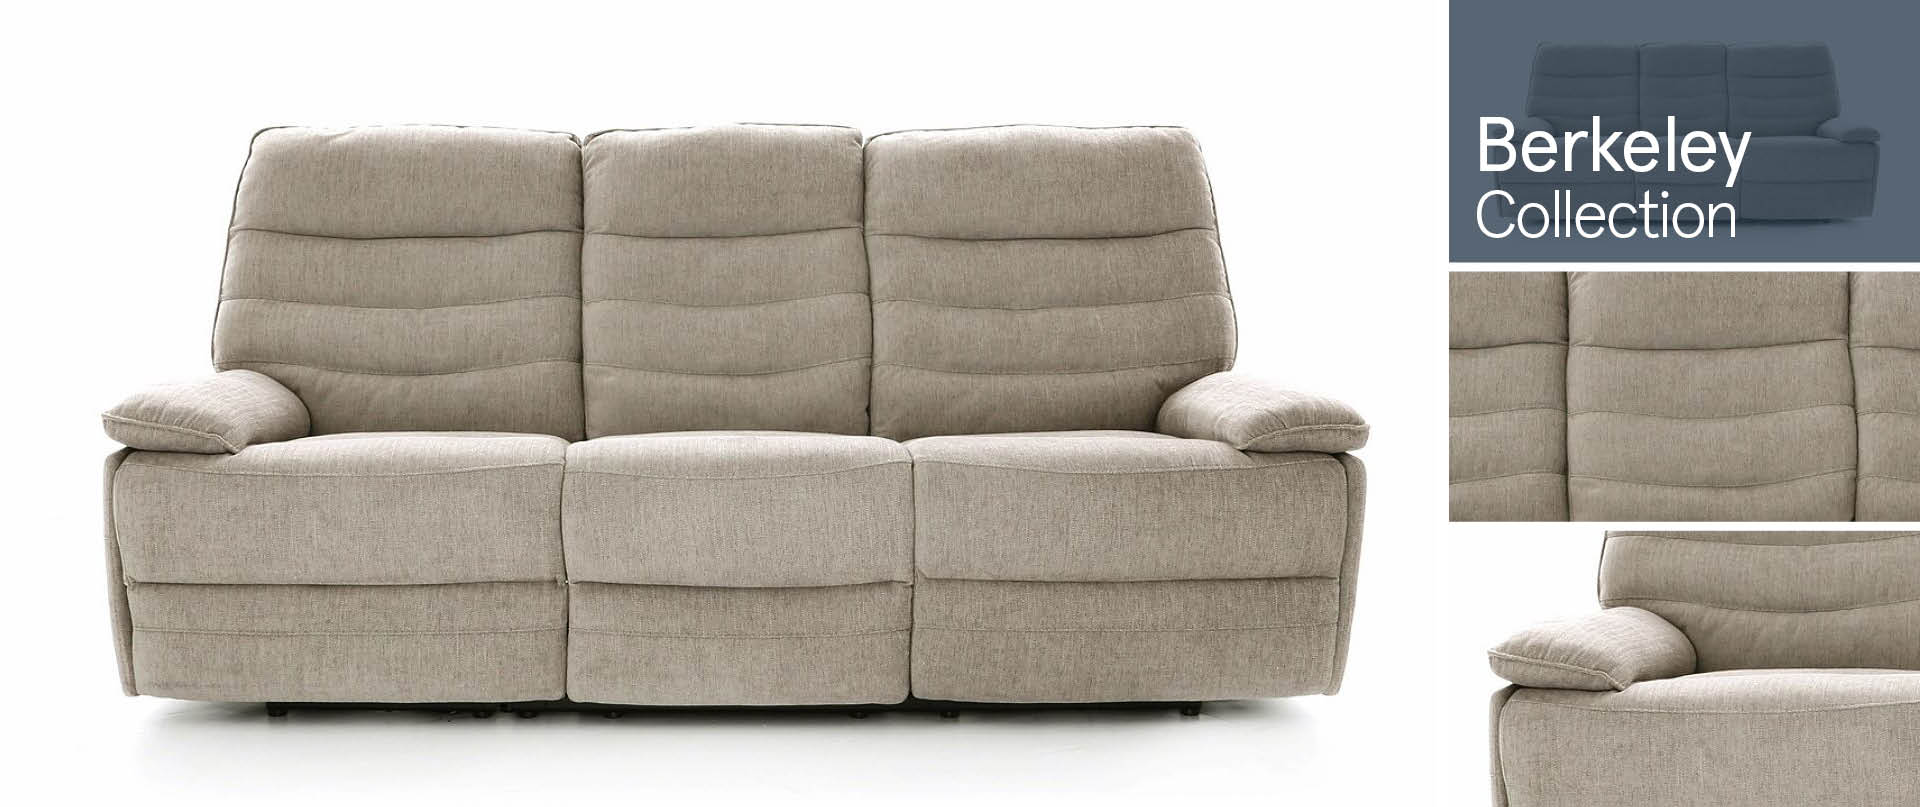 Berkeley All Fabric Sofa Ranges